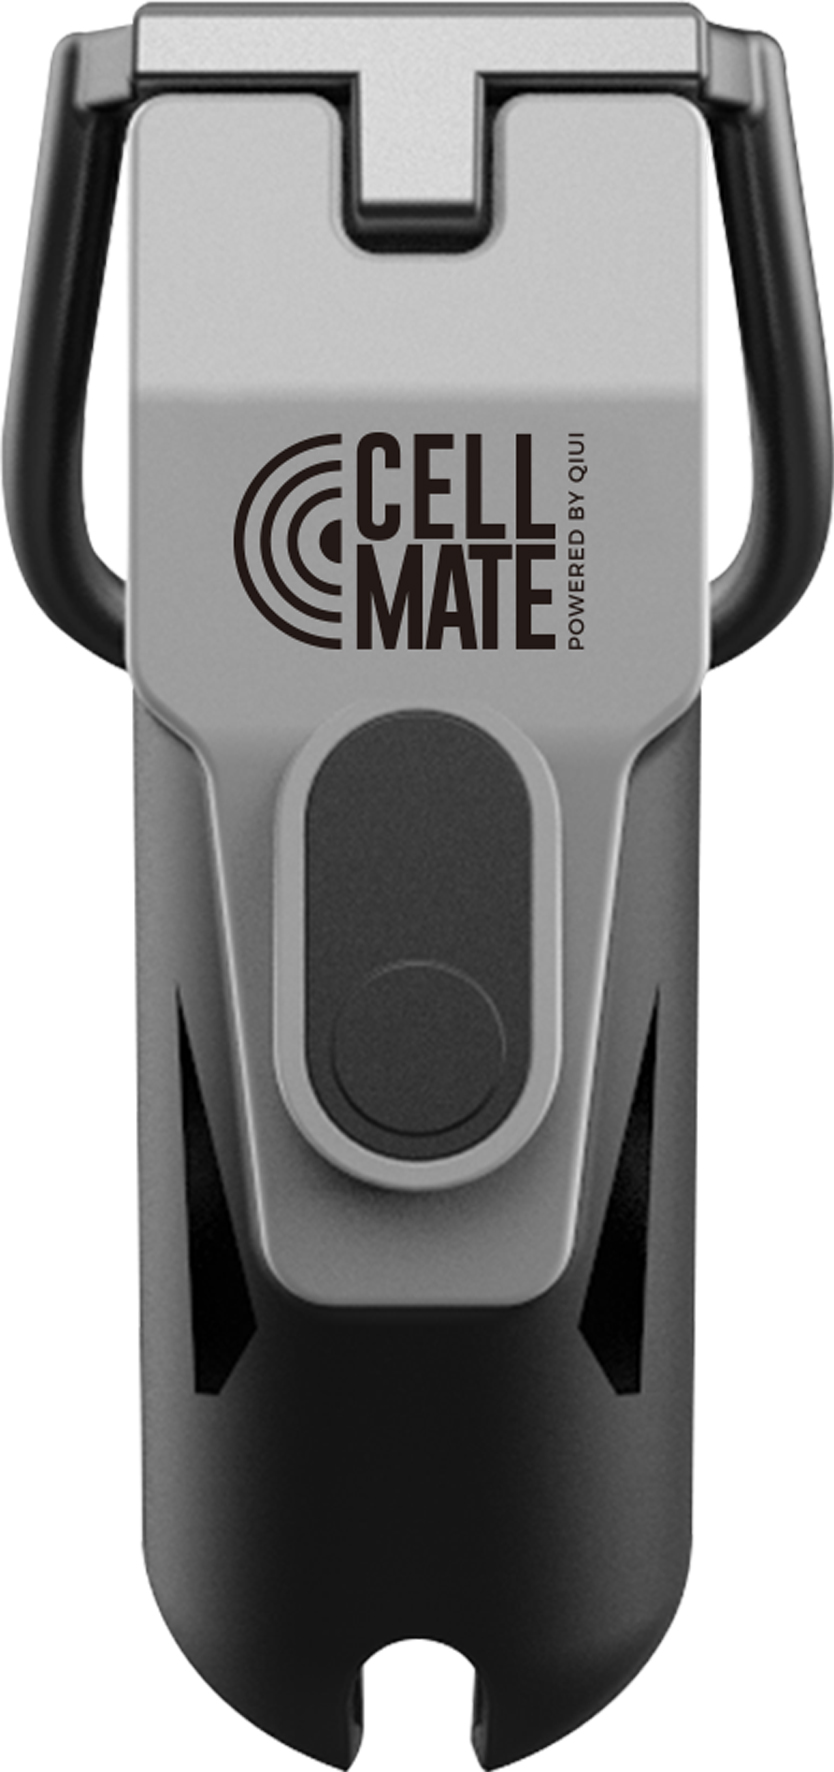 Cellmate remote control chastity belt